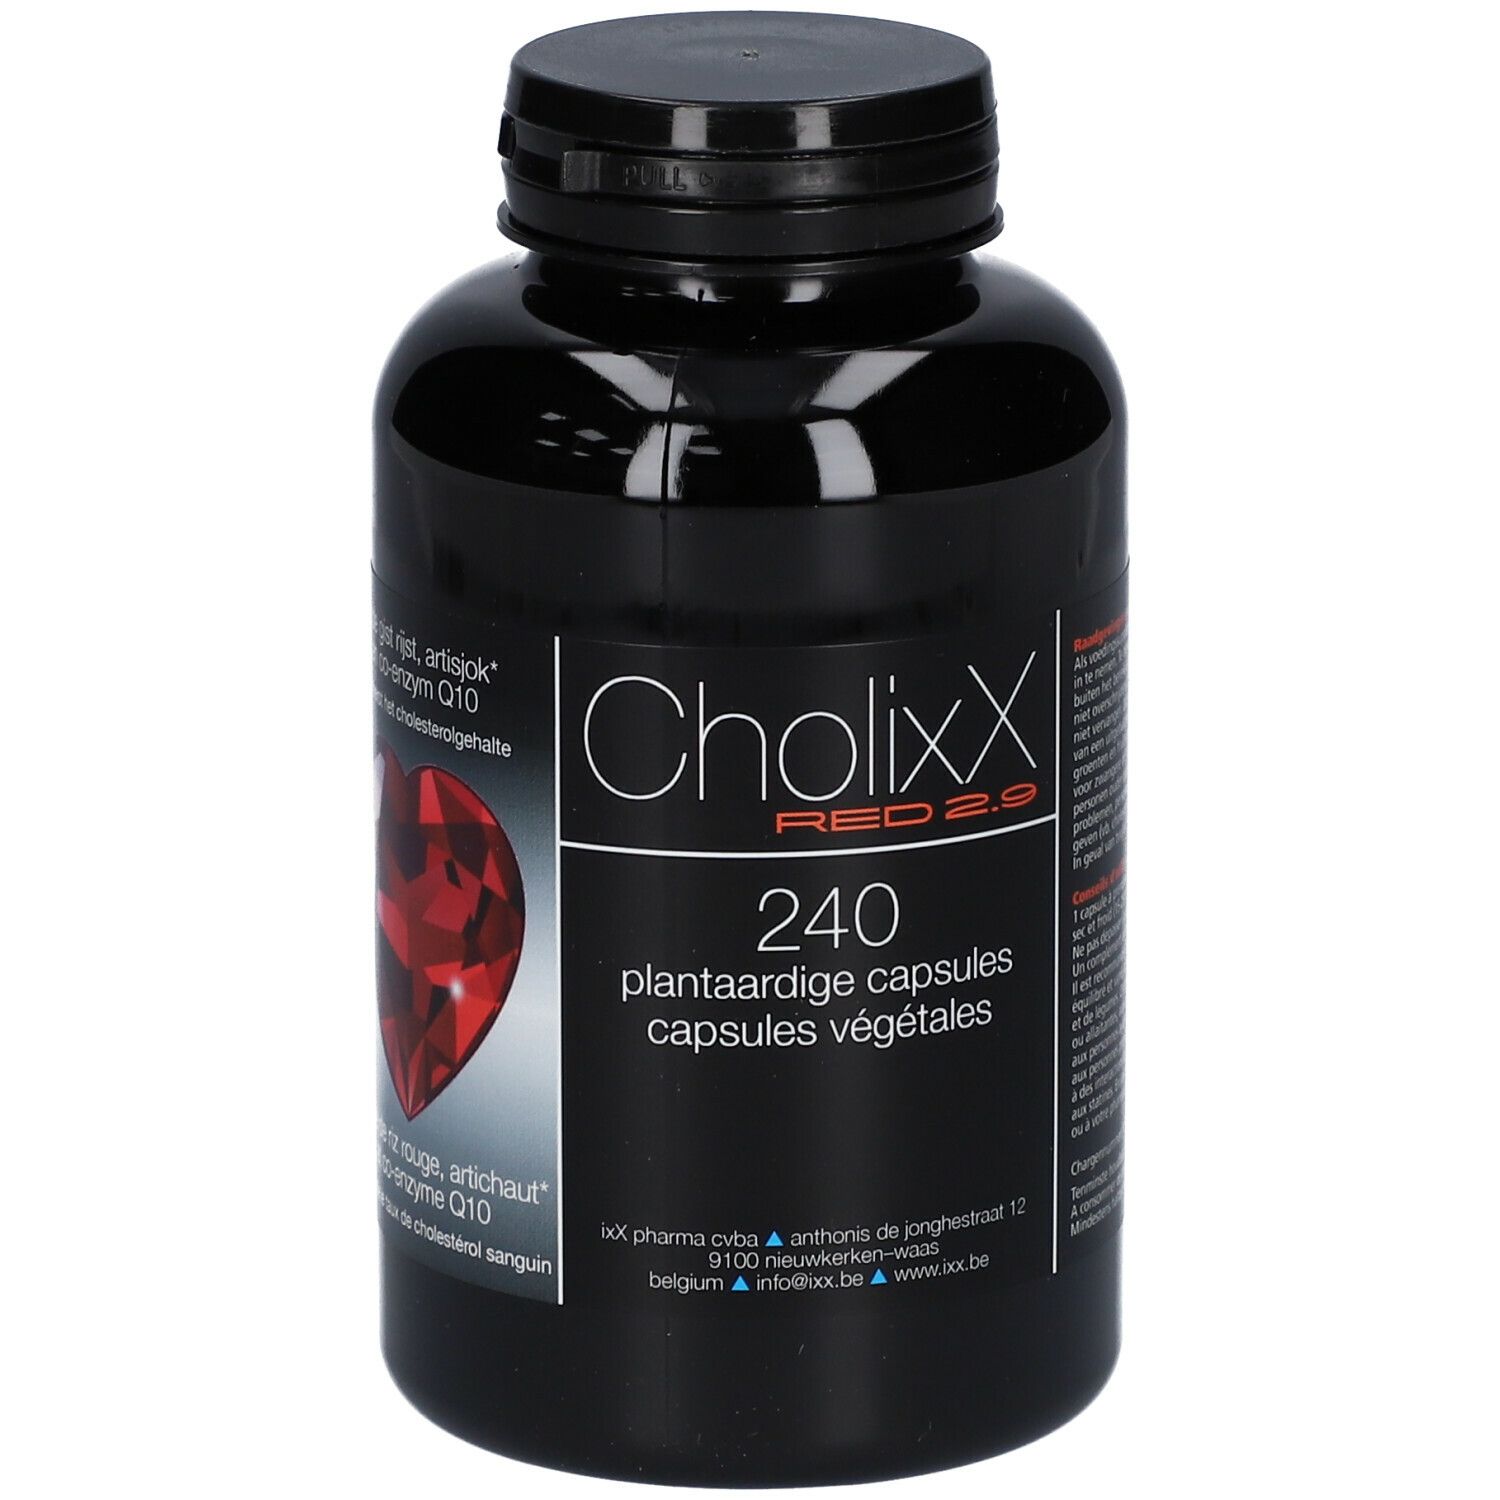 CholixX RED 2.9